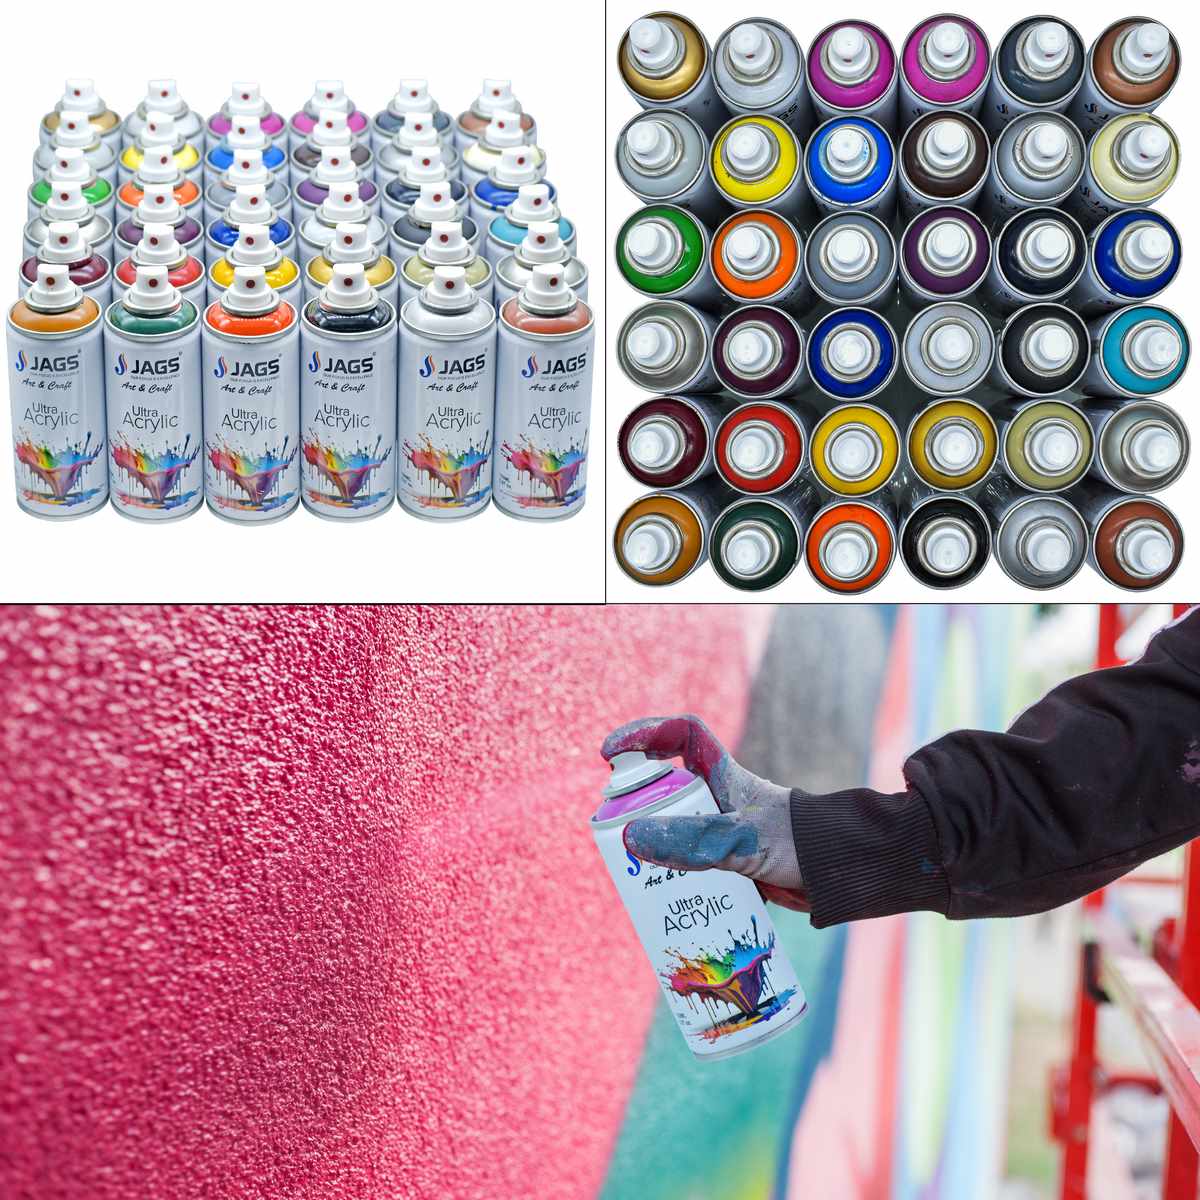 jags-mumbai Paint & Colours Spray Ultra Acrylic 150ml Havells Grey